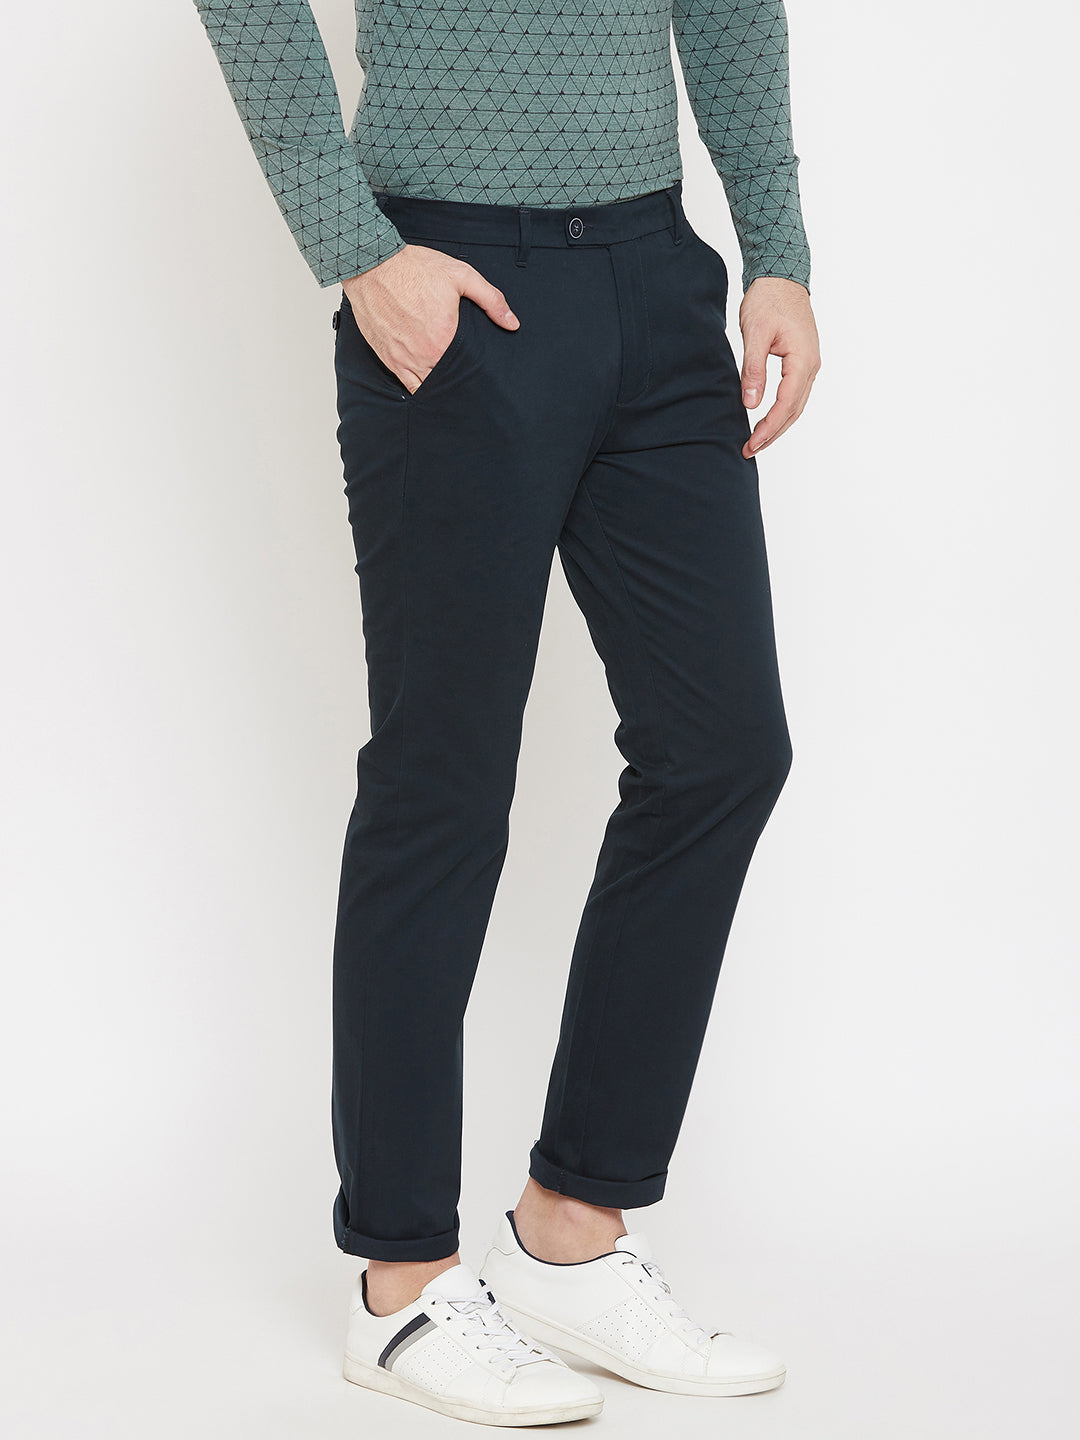 Navy Blue Slim fit Trousers - Men Trousers